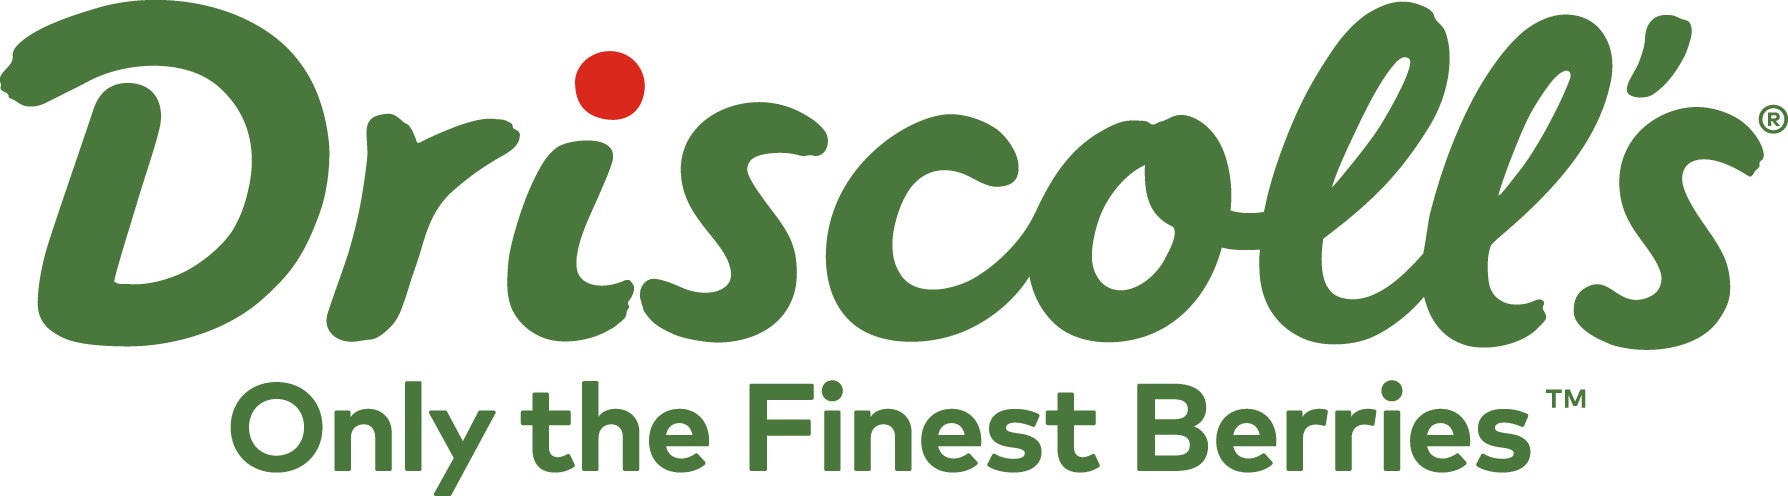 Driscolls Logo